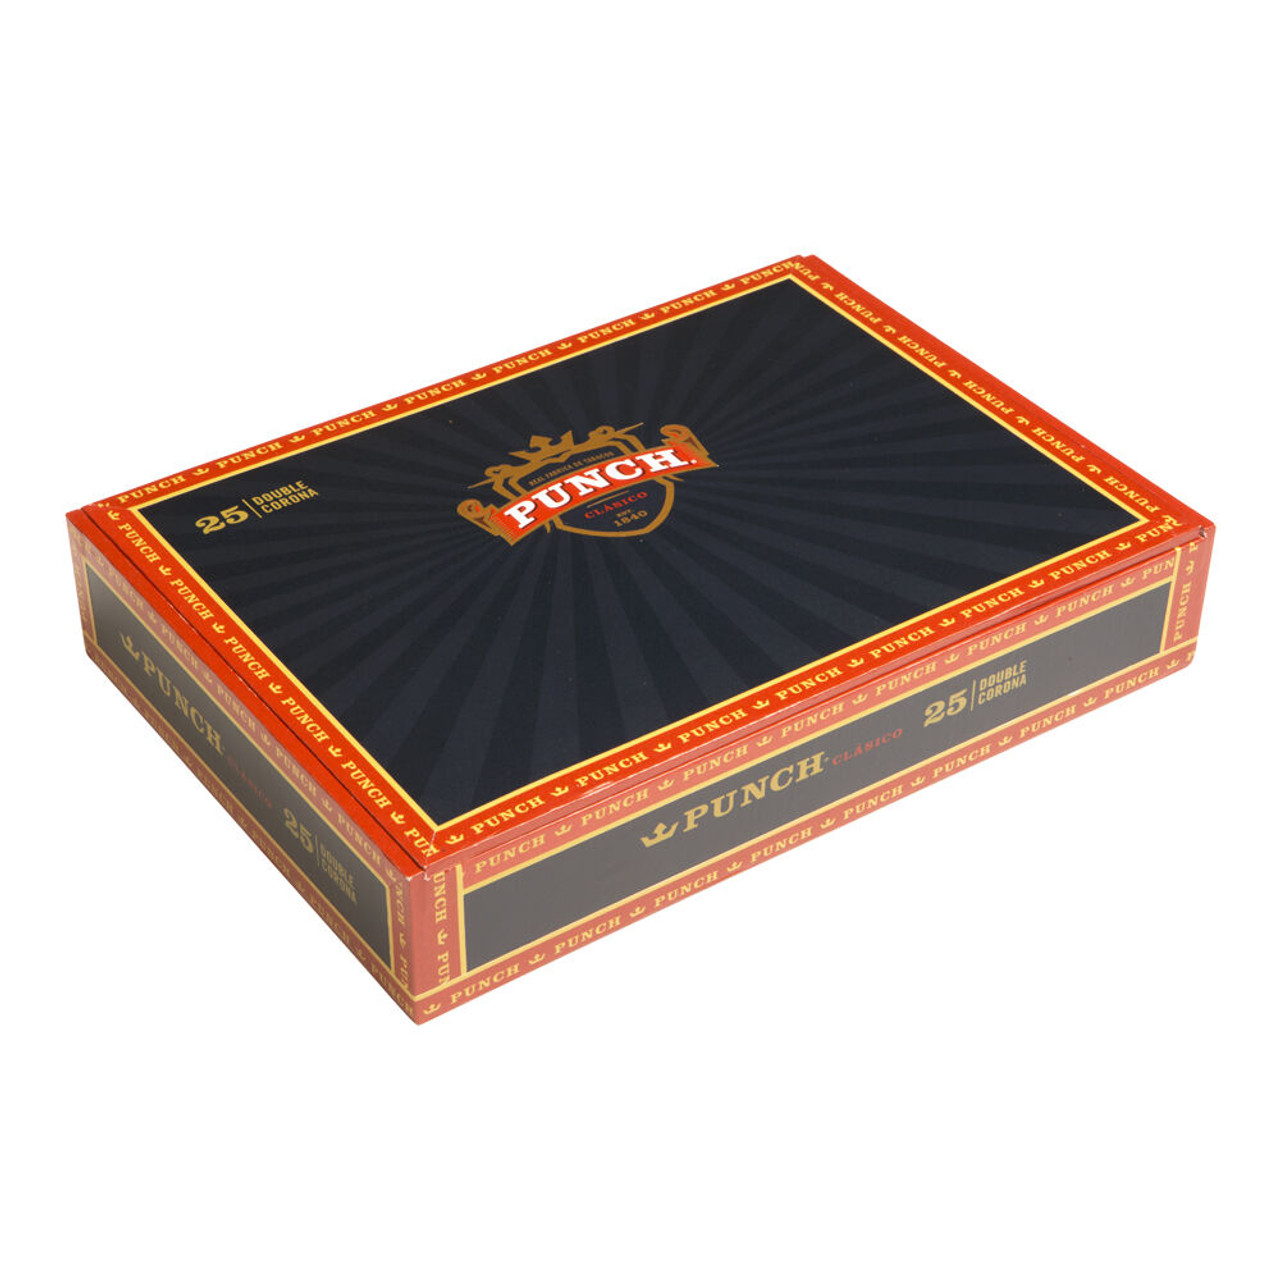 Punch Double Corona Maduro Cigars - 6.75 x 48 (Box of 25) *Box